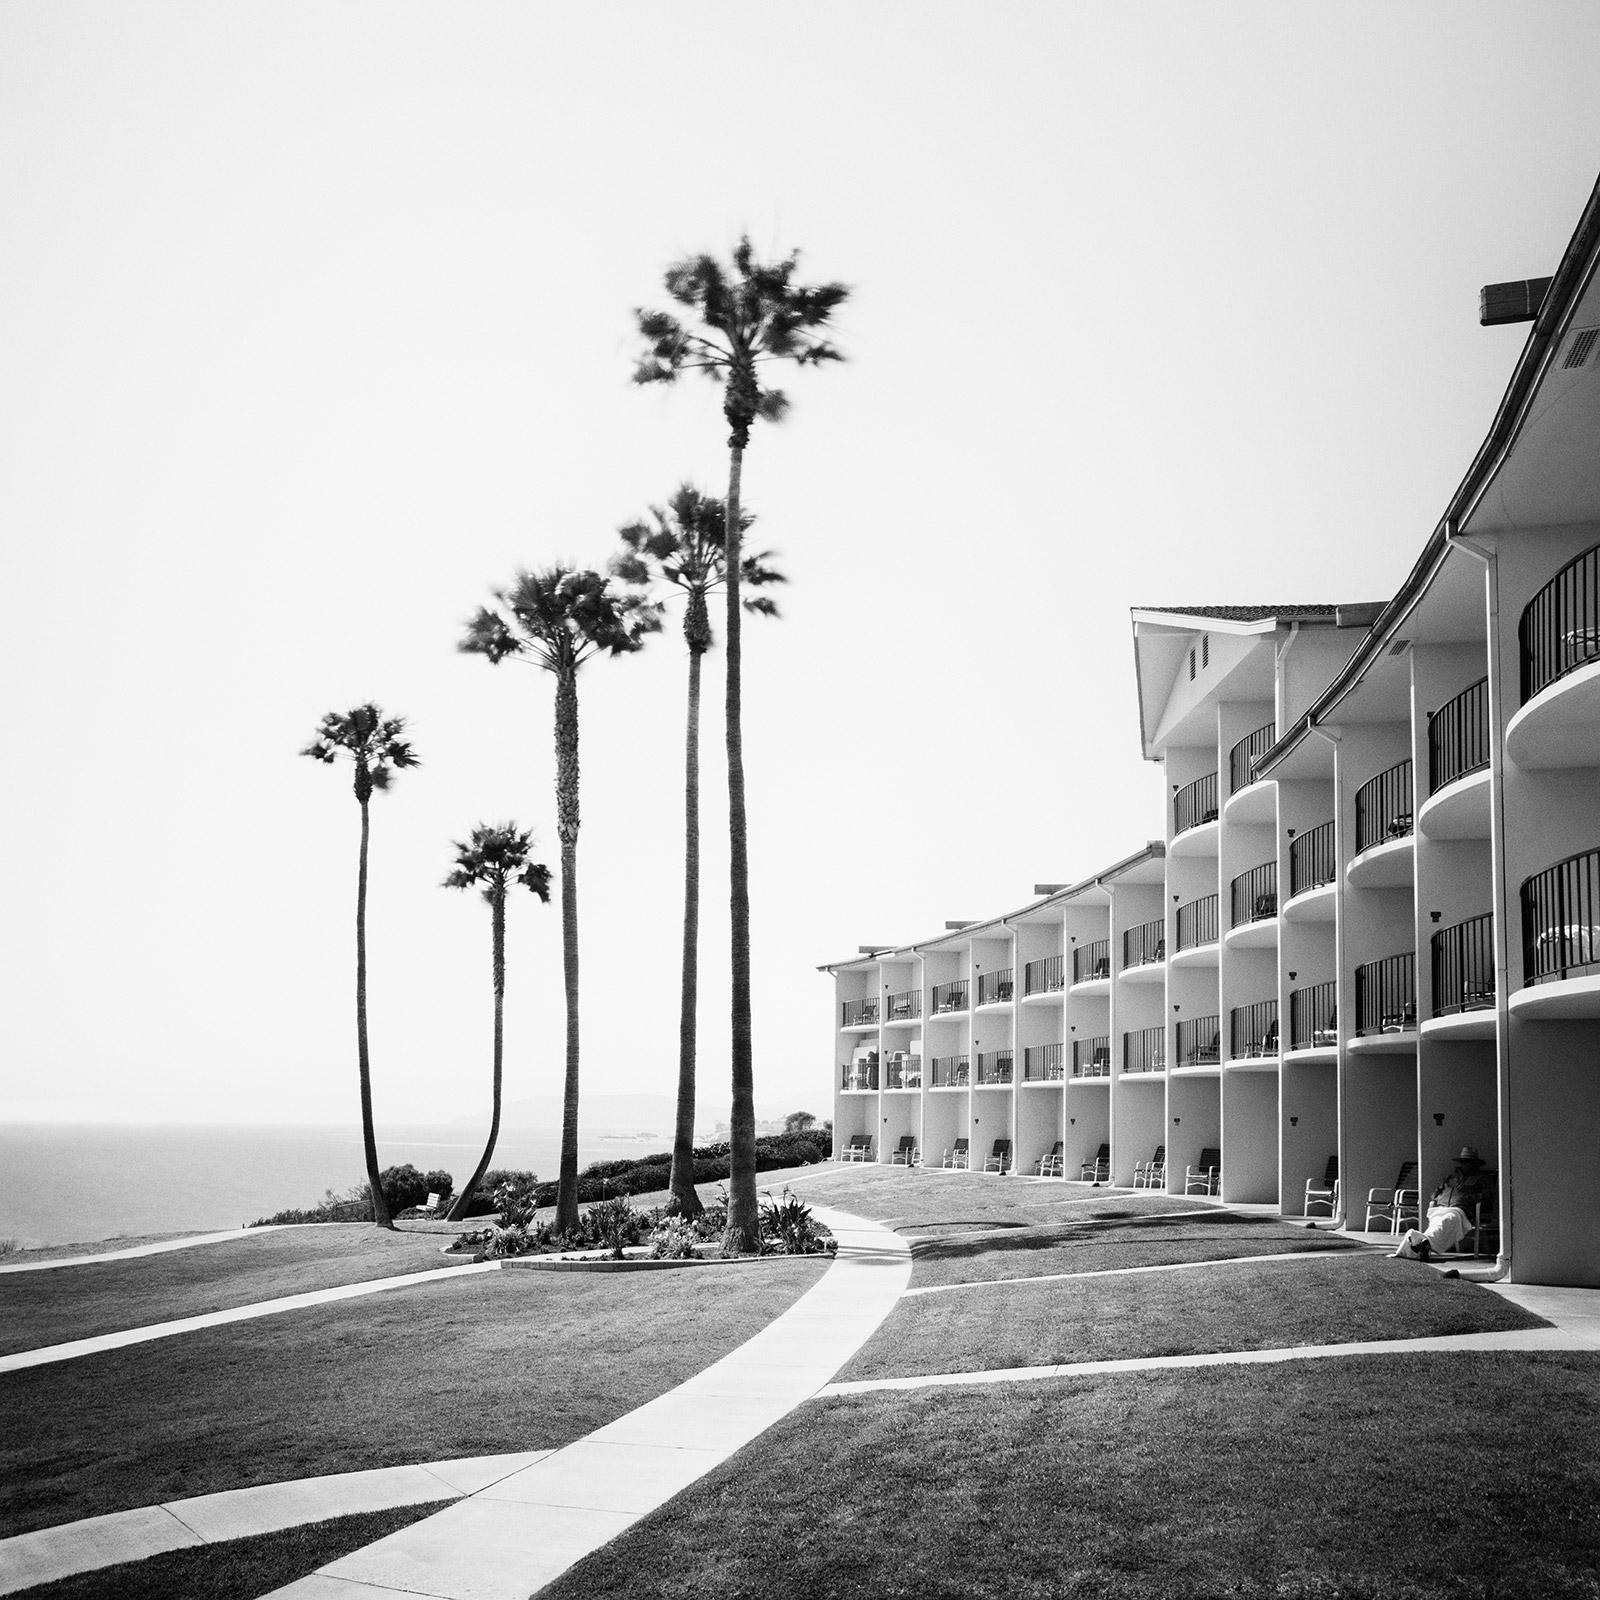 Black and White Photograph Gerald Berghammer - Palms Motel, Santa Barbara, USA, photographie noir et blanc, fine art landscape